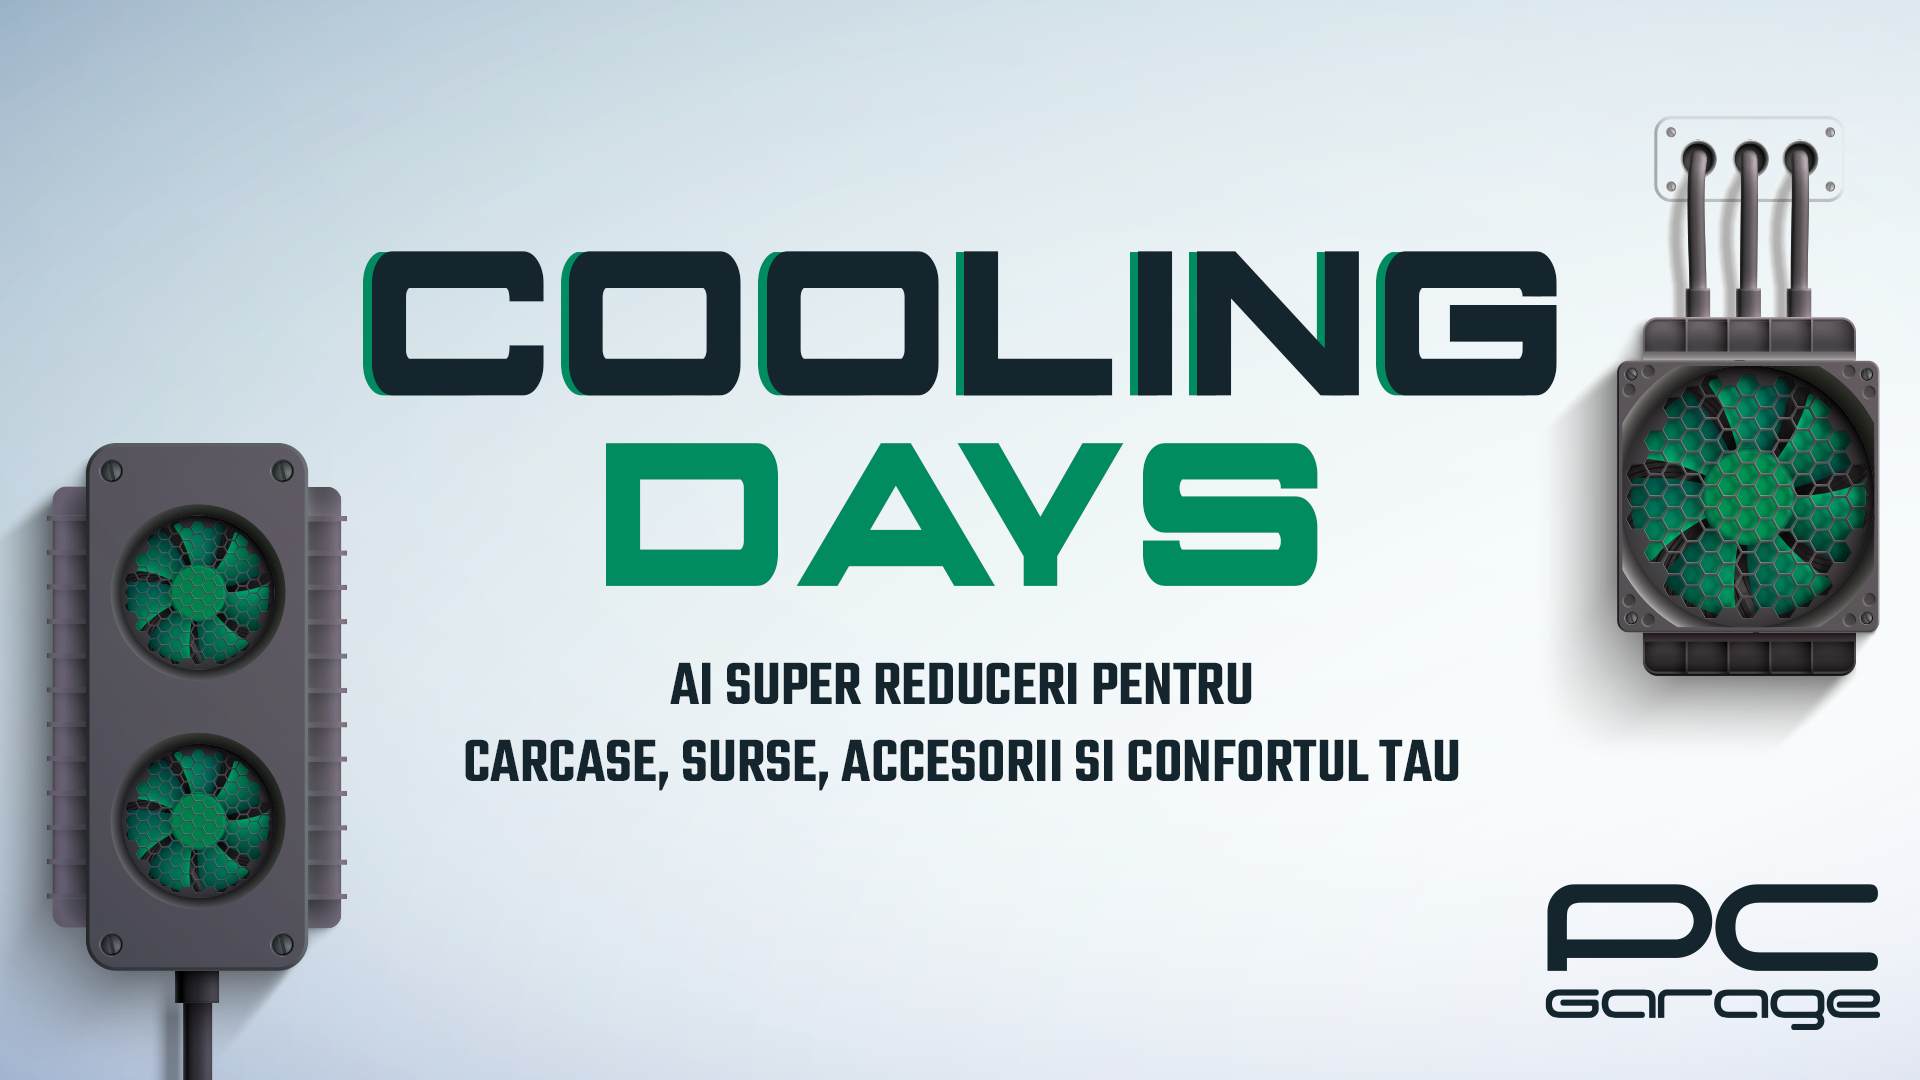 PC Garage anunţă cooling days